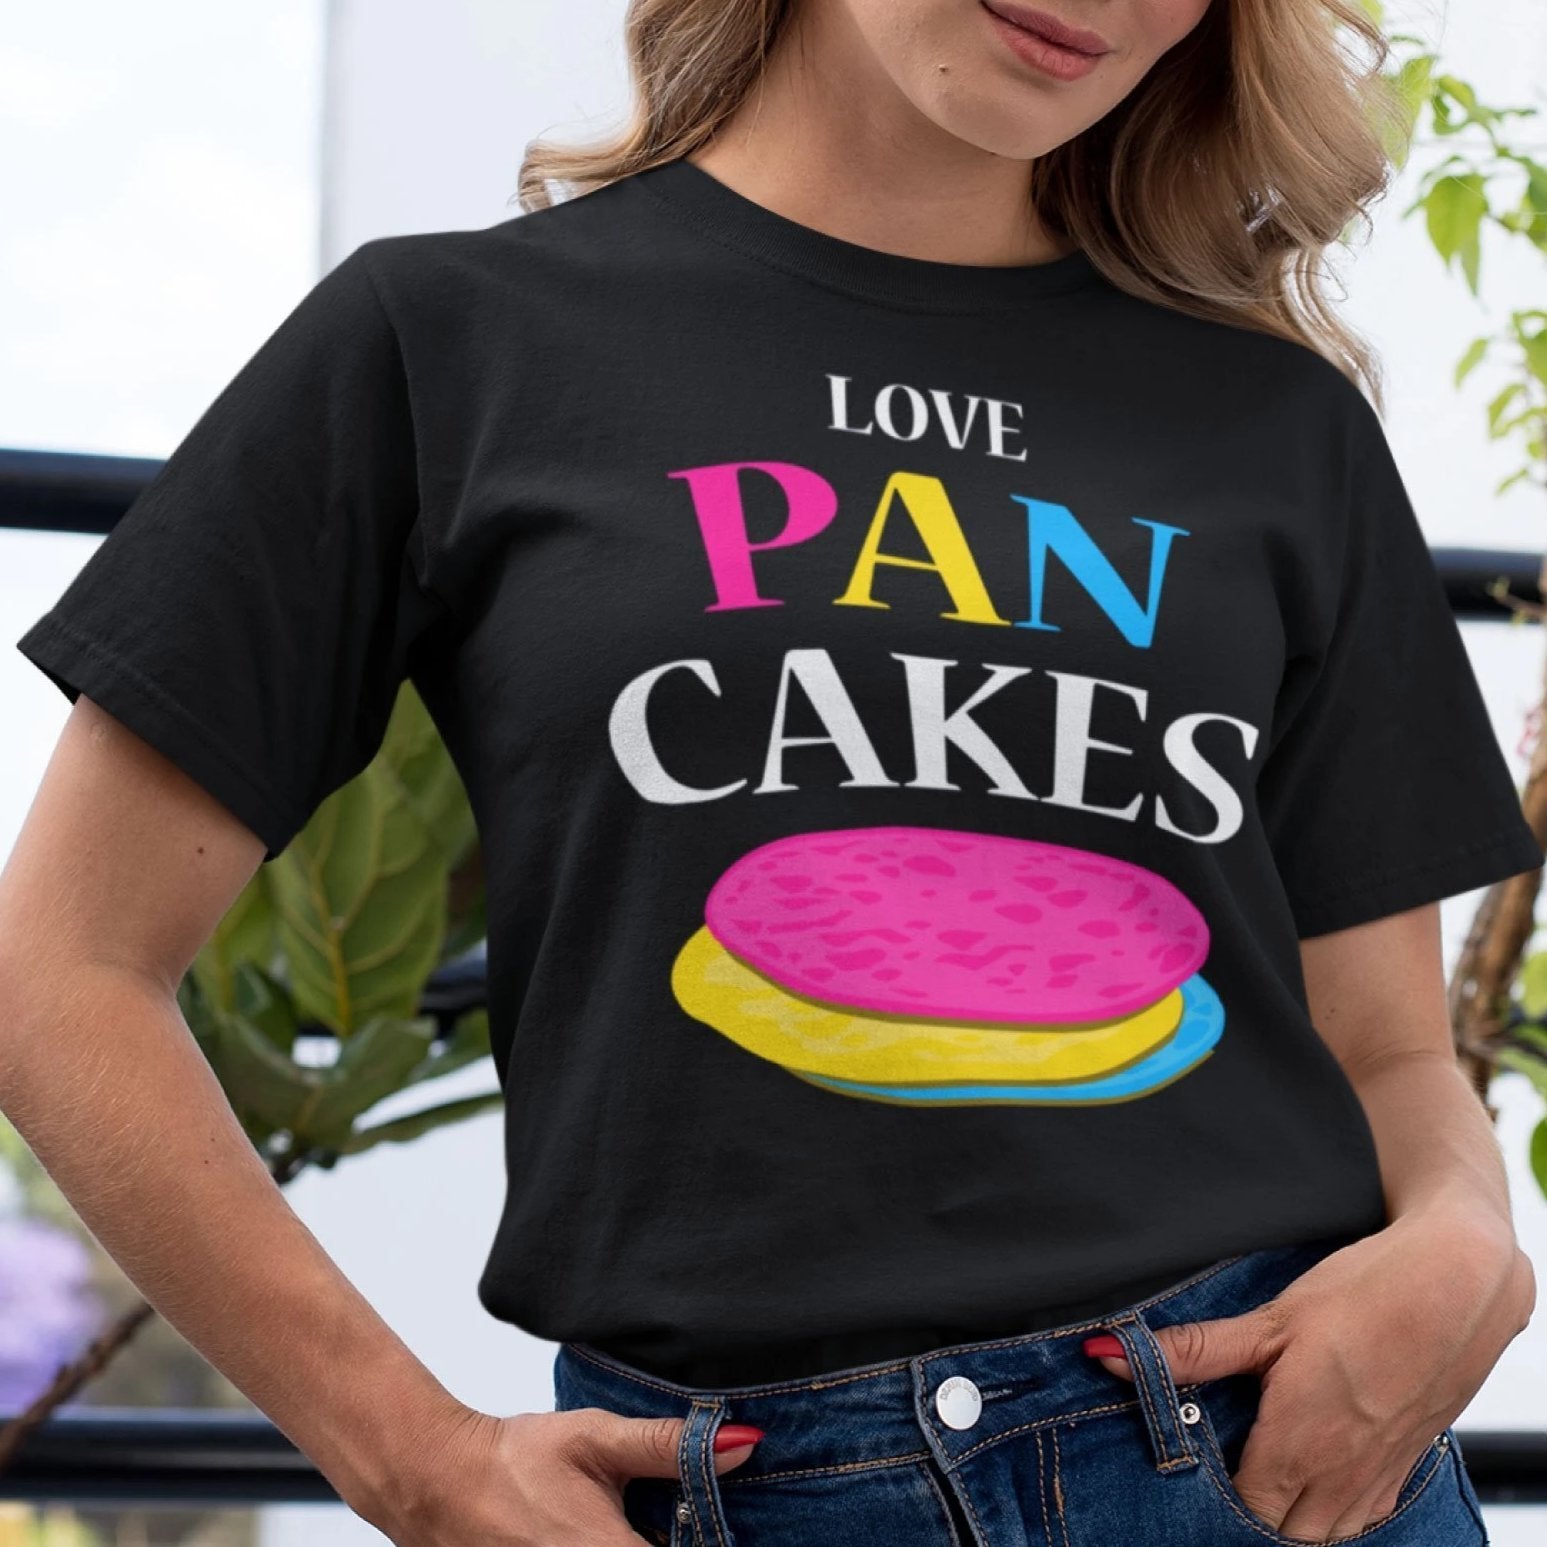 Pansexual Pancakes Shirt - On Trend Shirts